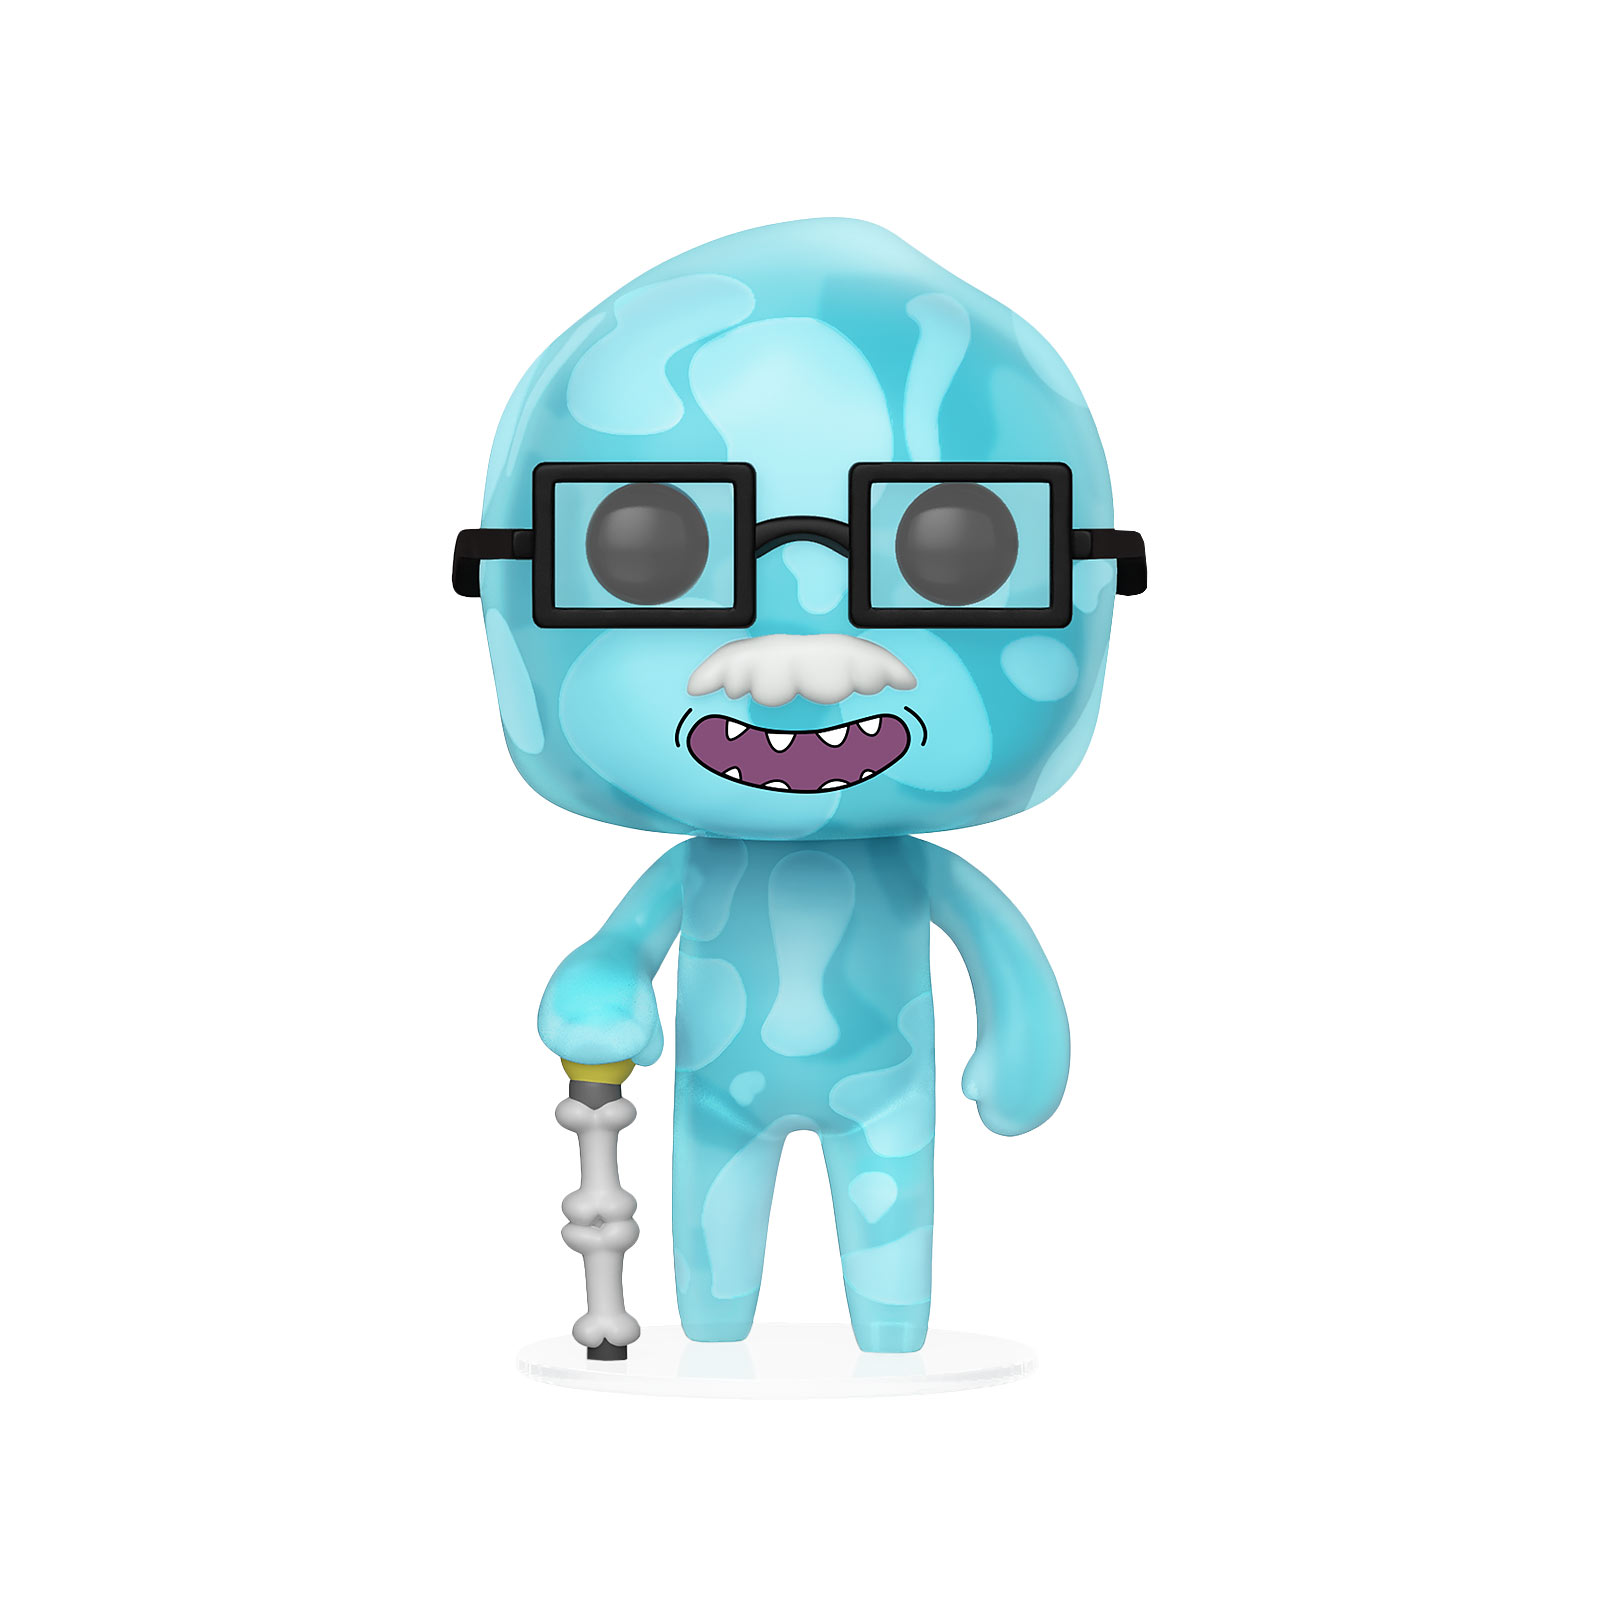 Rick and Morty - Dr. Xenon Bloom Glow in the Dark Funko Pop Figur